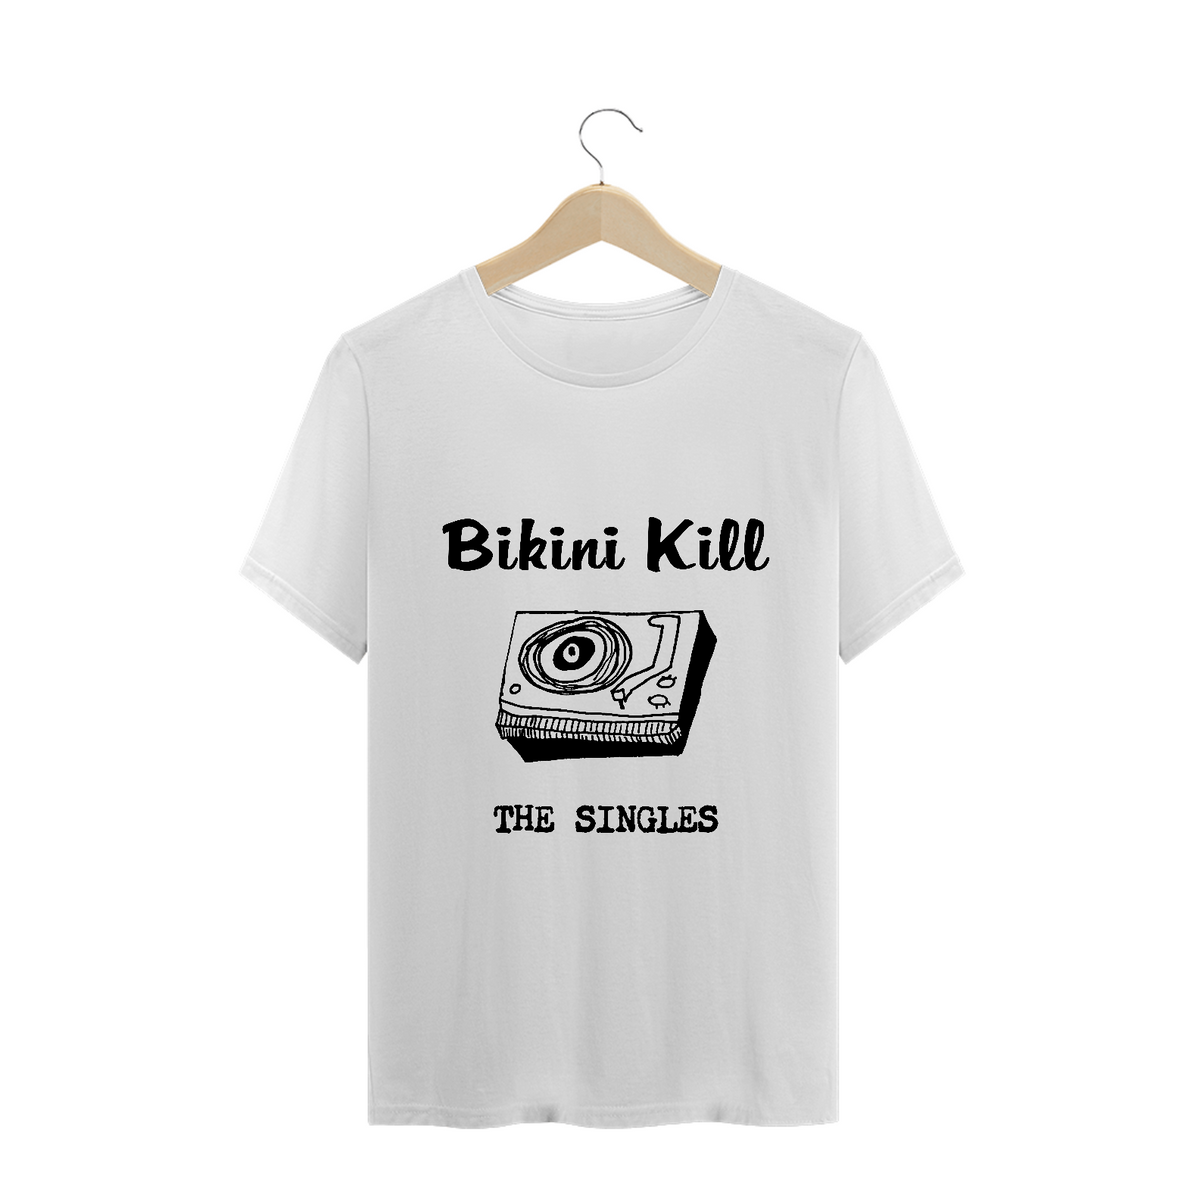 Nome do produto: BIKINI KILL